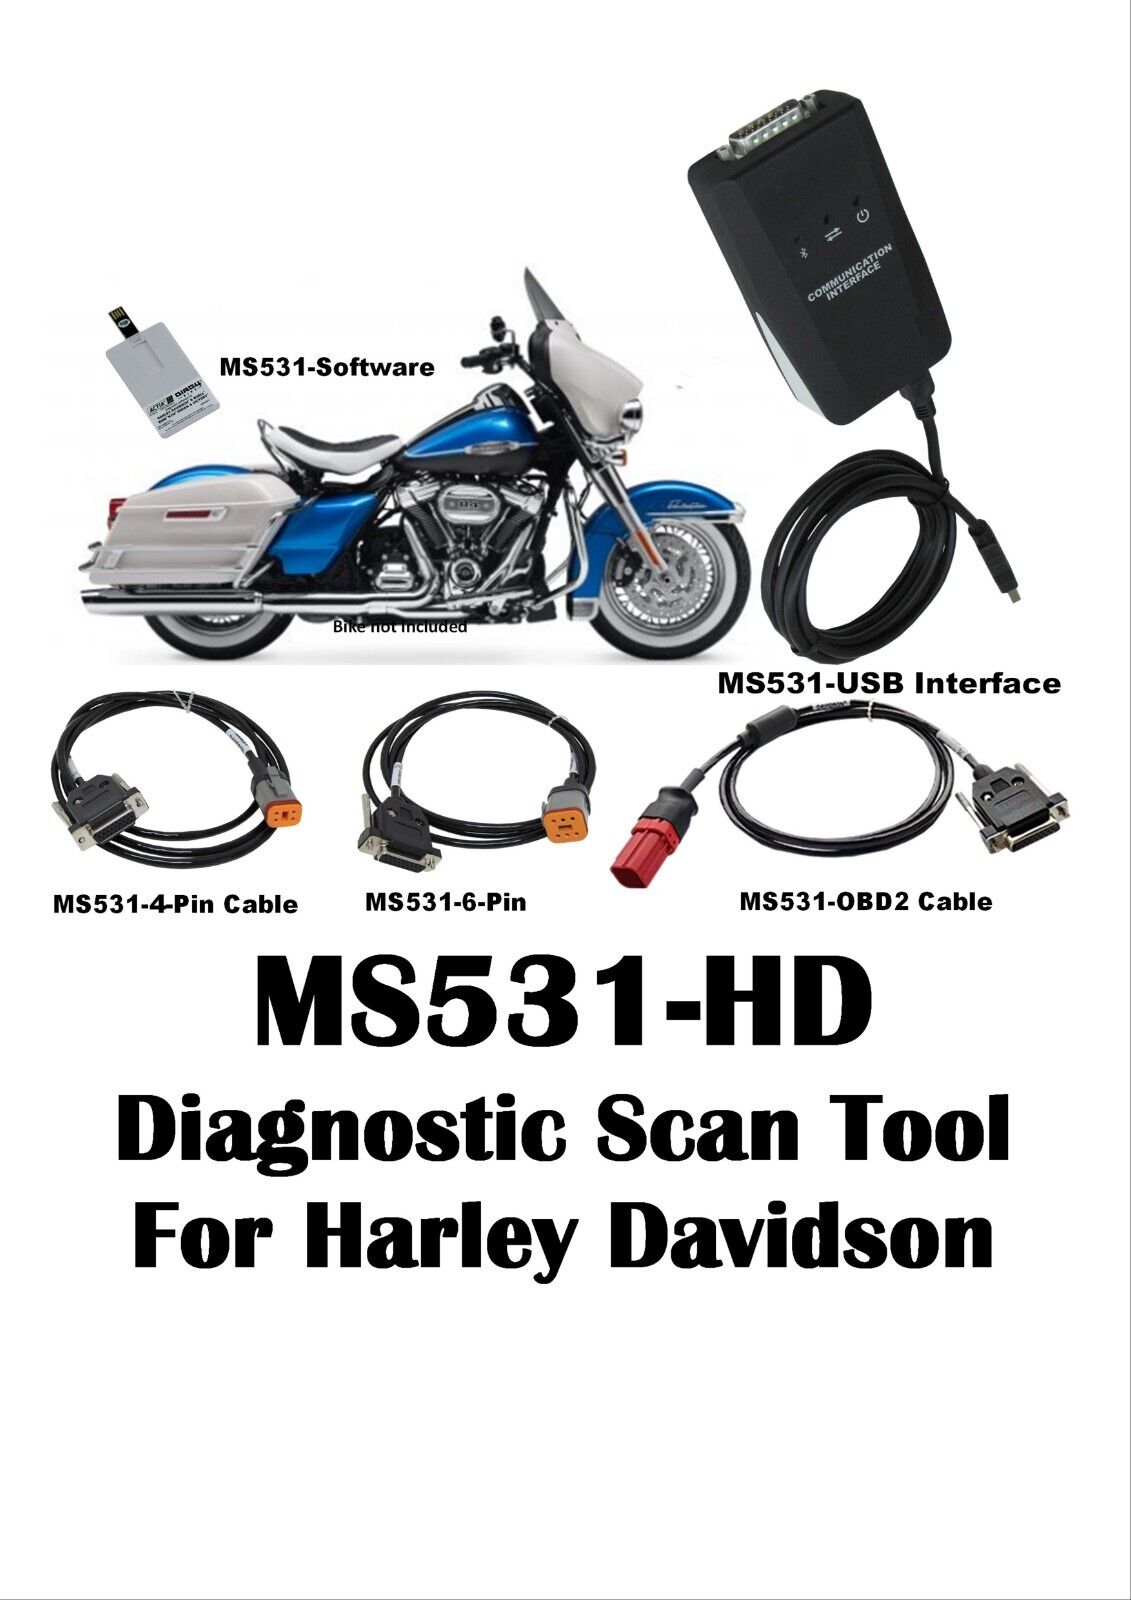 DIAG4 BIKE Serial Diagnostic Scanner AT 531 5090 MS 531-HD for Harley Davidson